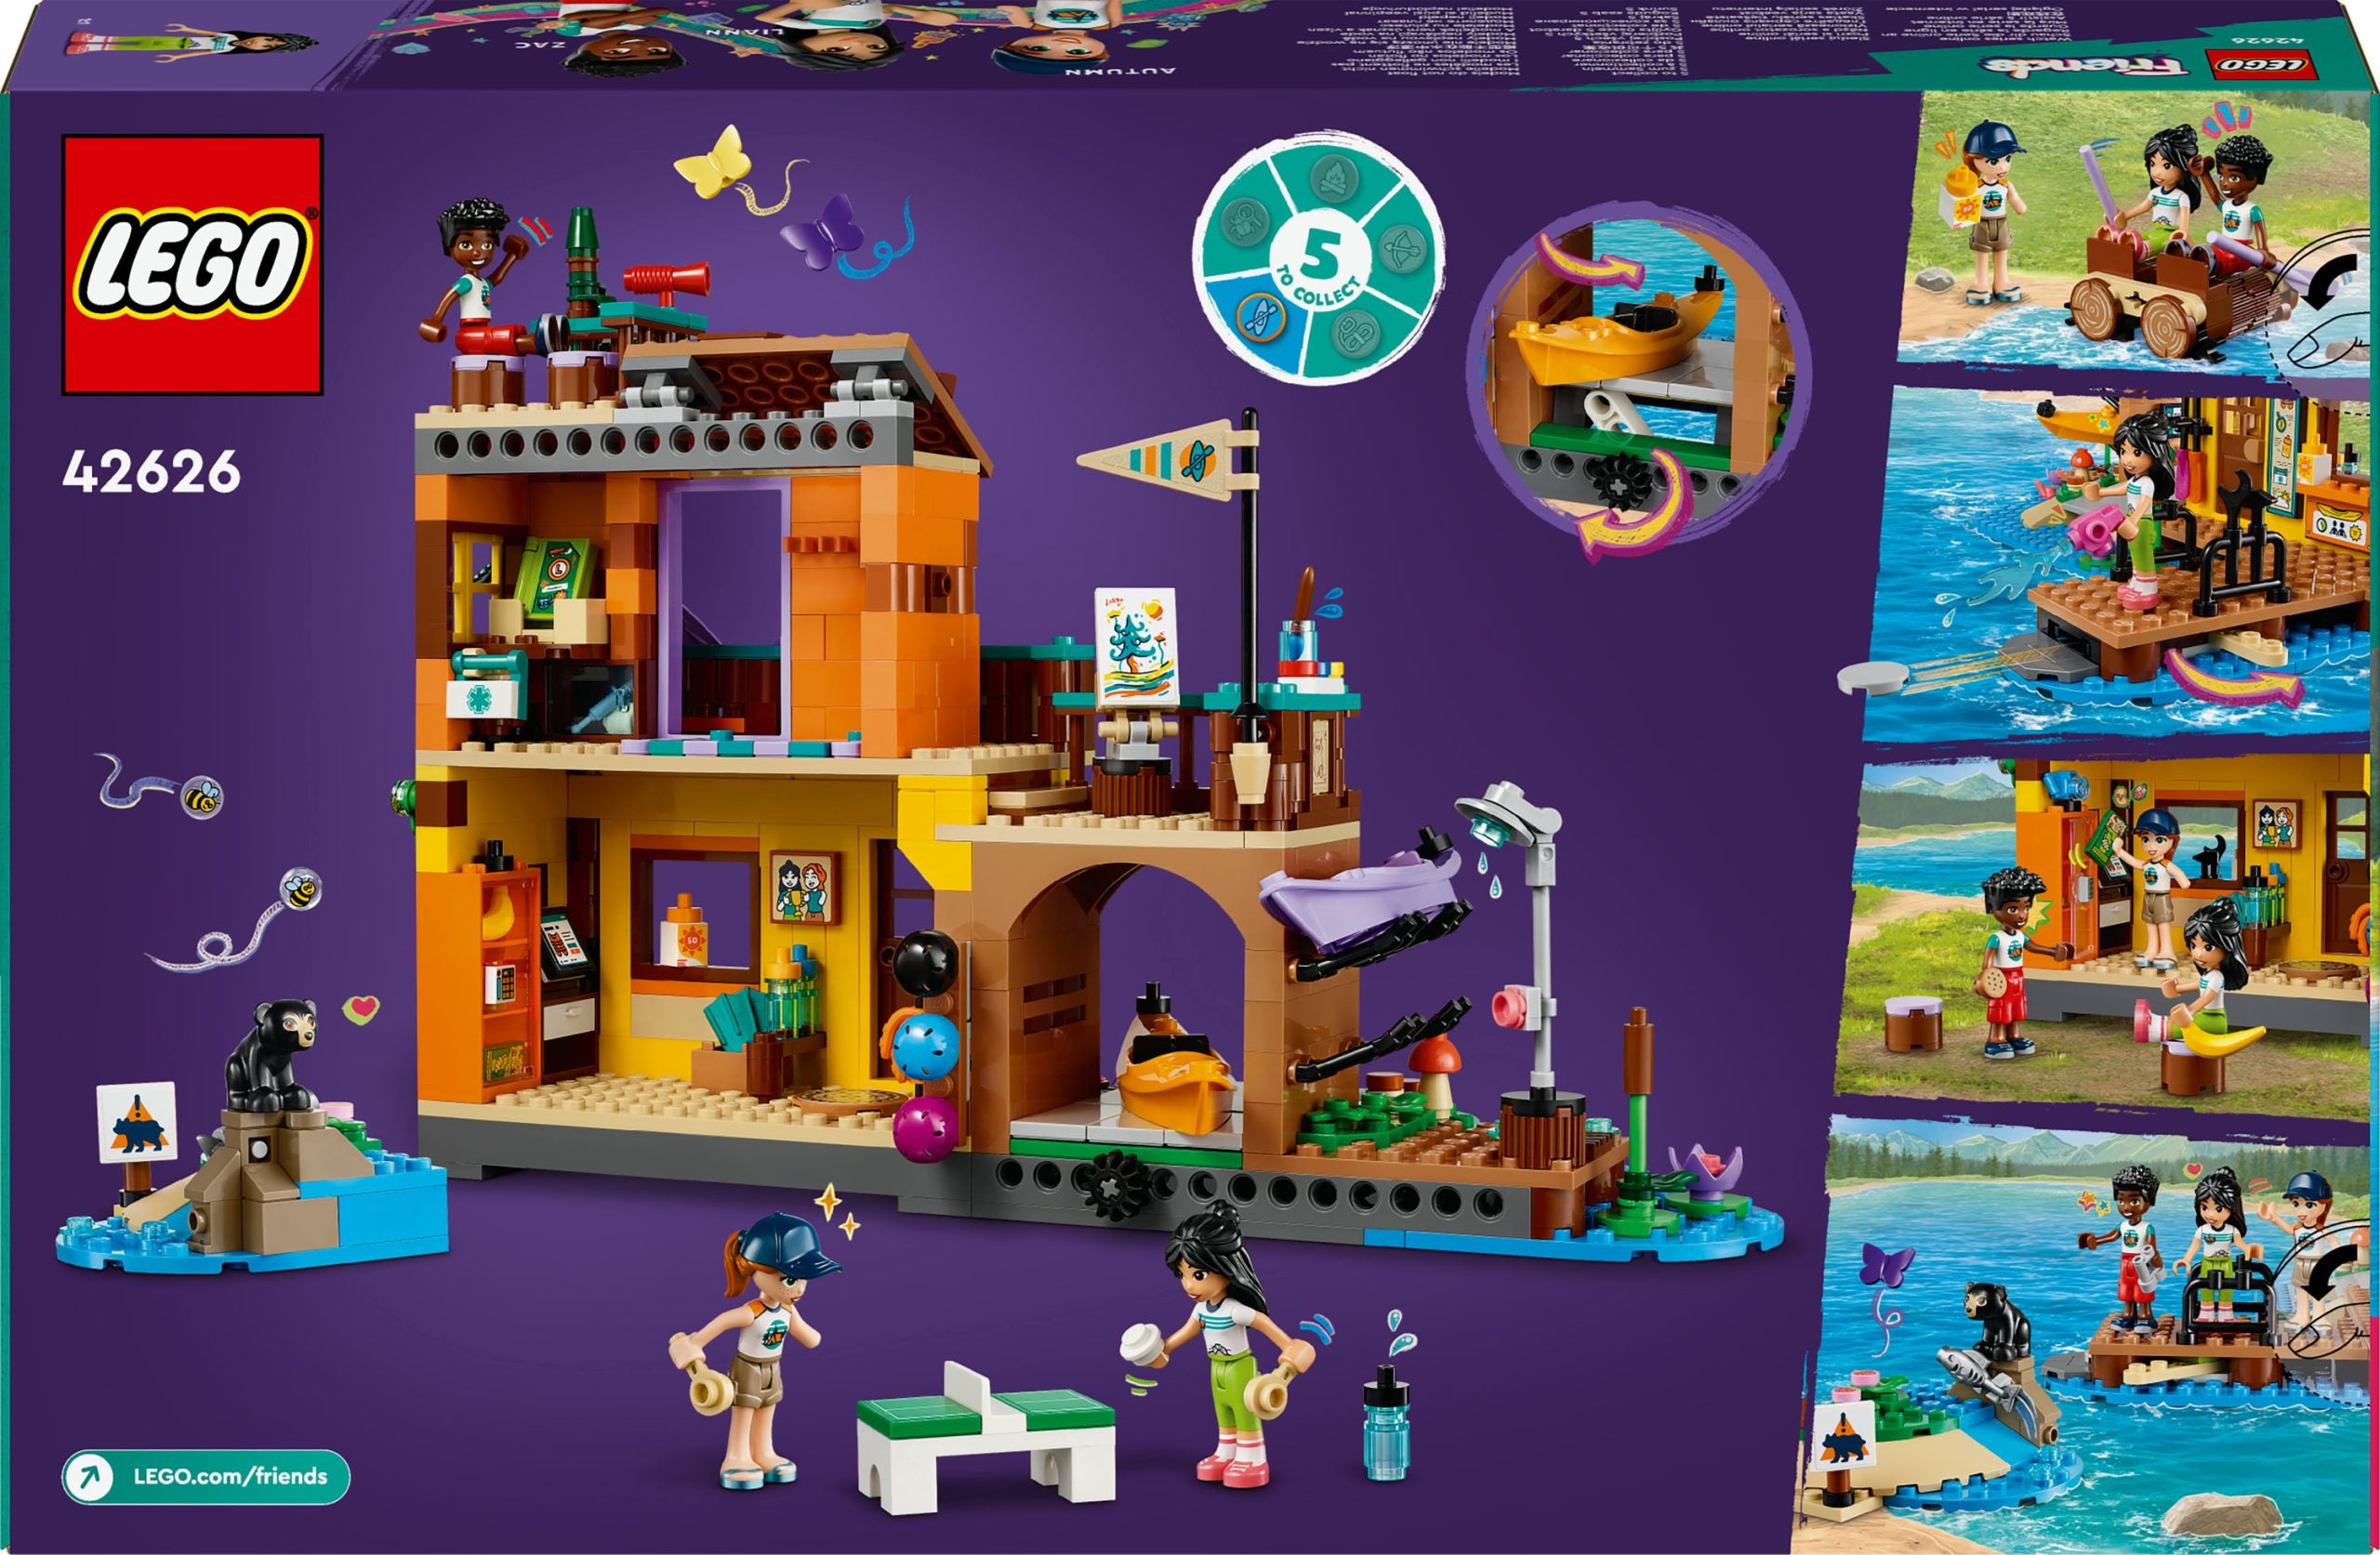 42626 LEGO Friends Campo Avventura - Sport acquatici